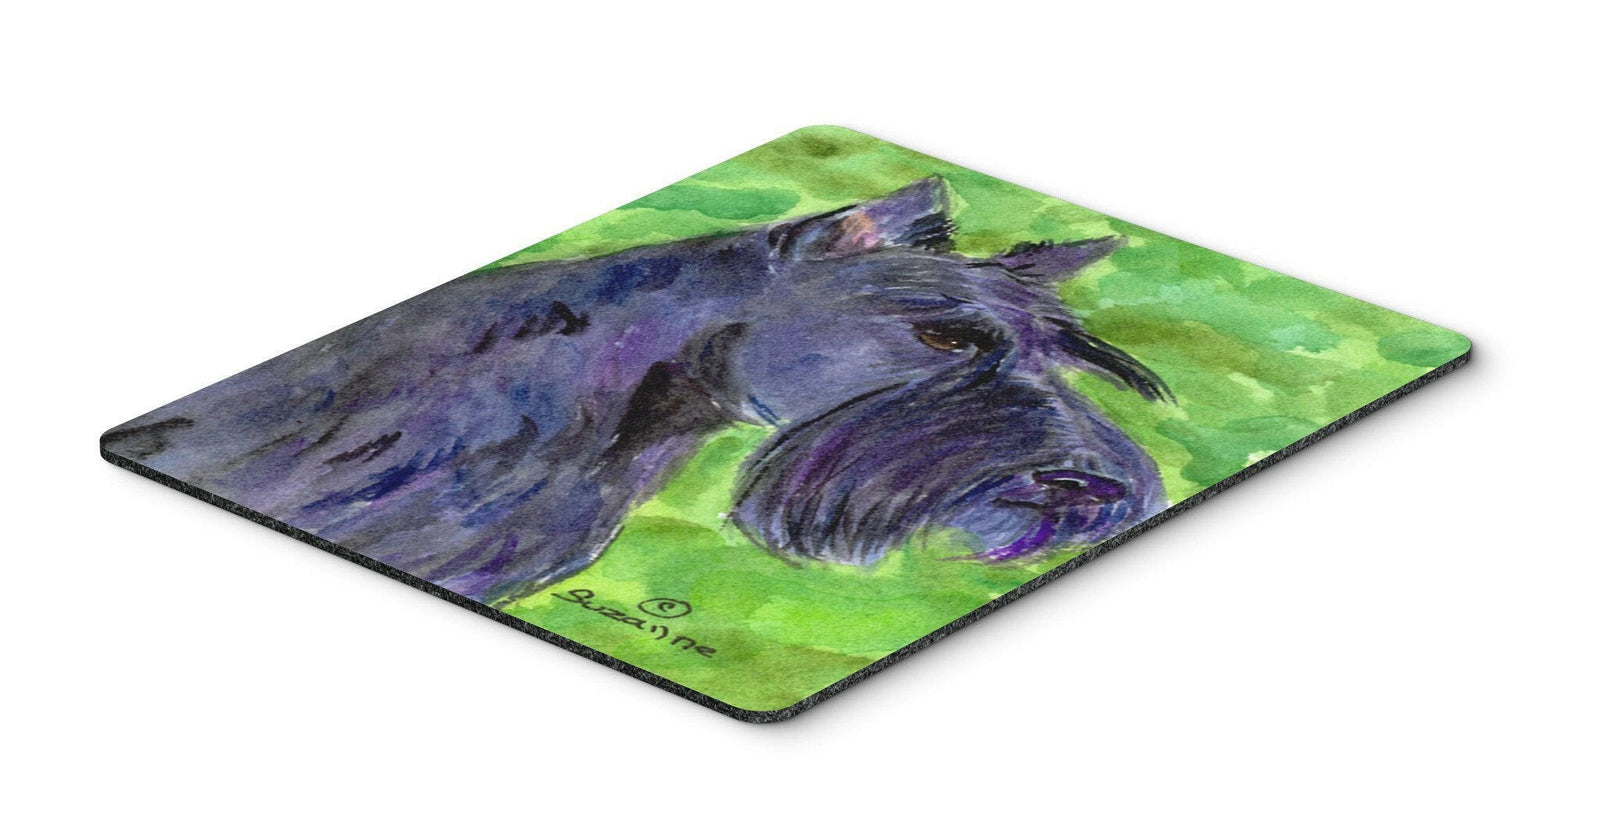 Scottish Terrier Mouse Pad / Hot Pad / Trivet by Caroline's Treasures